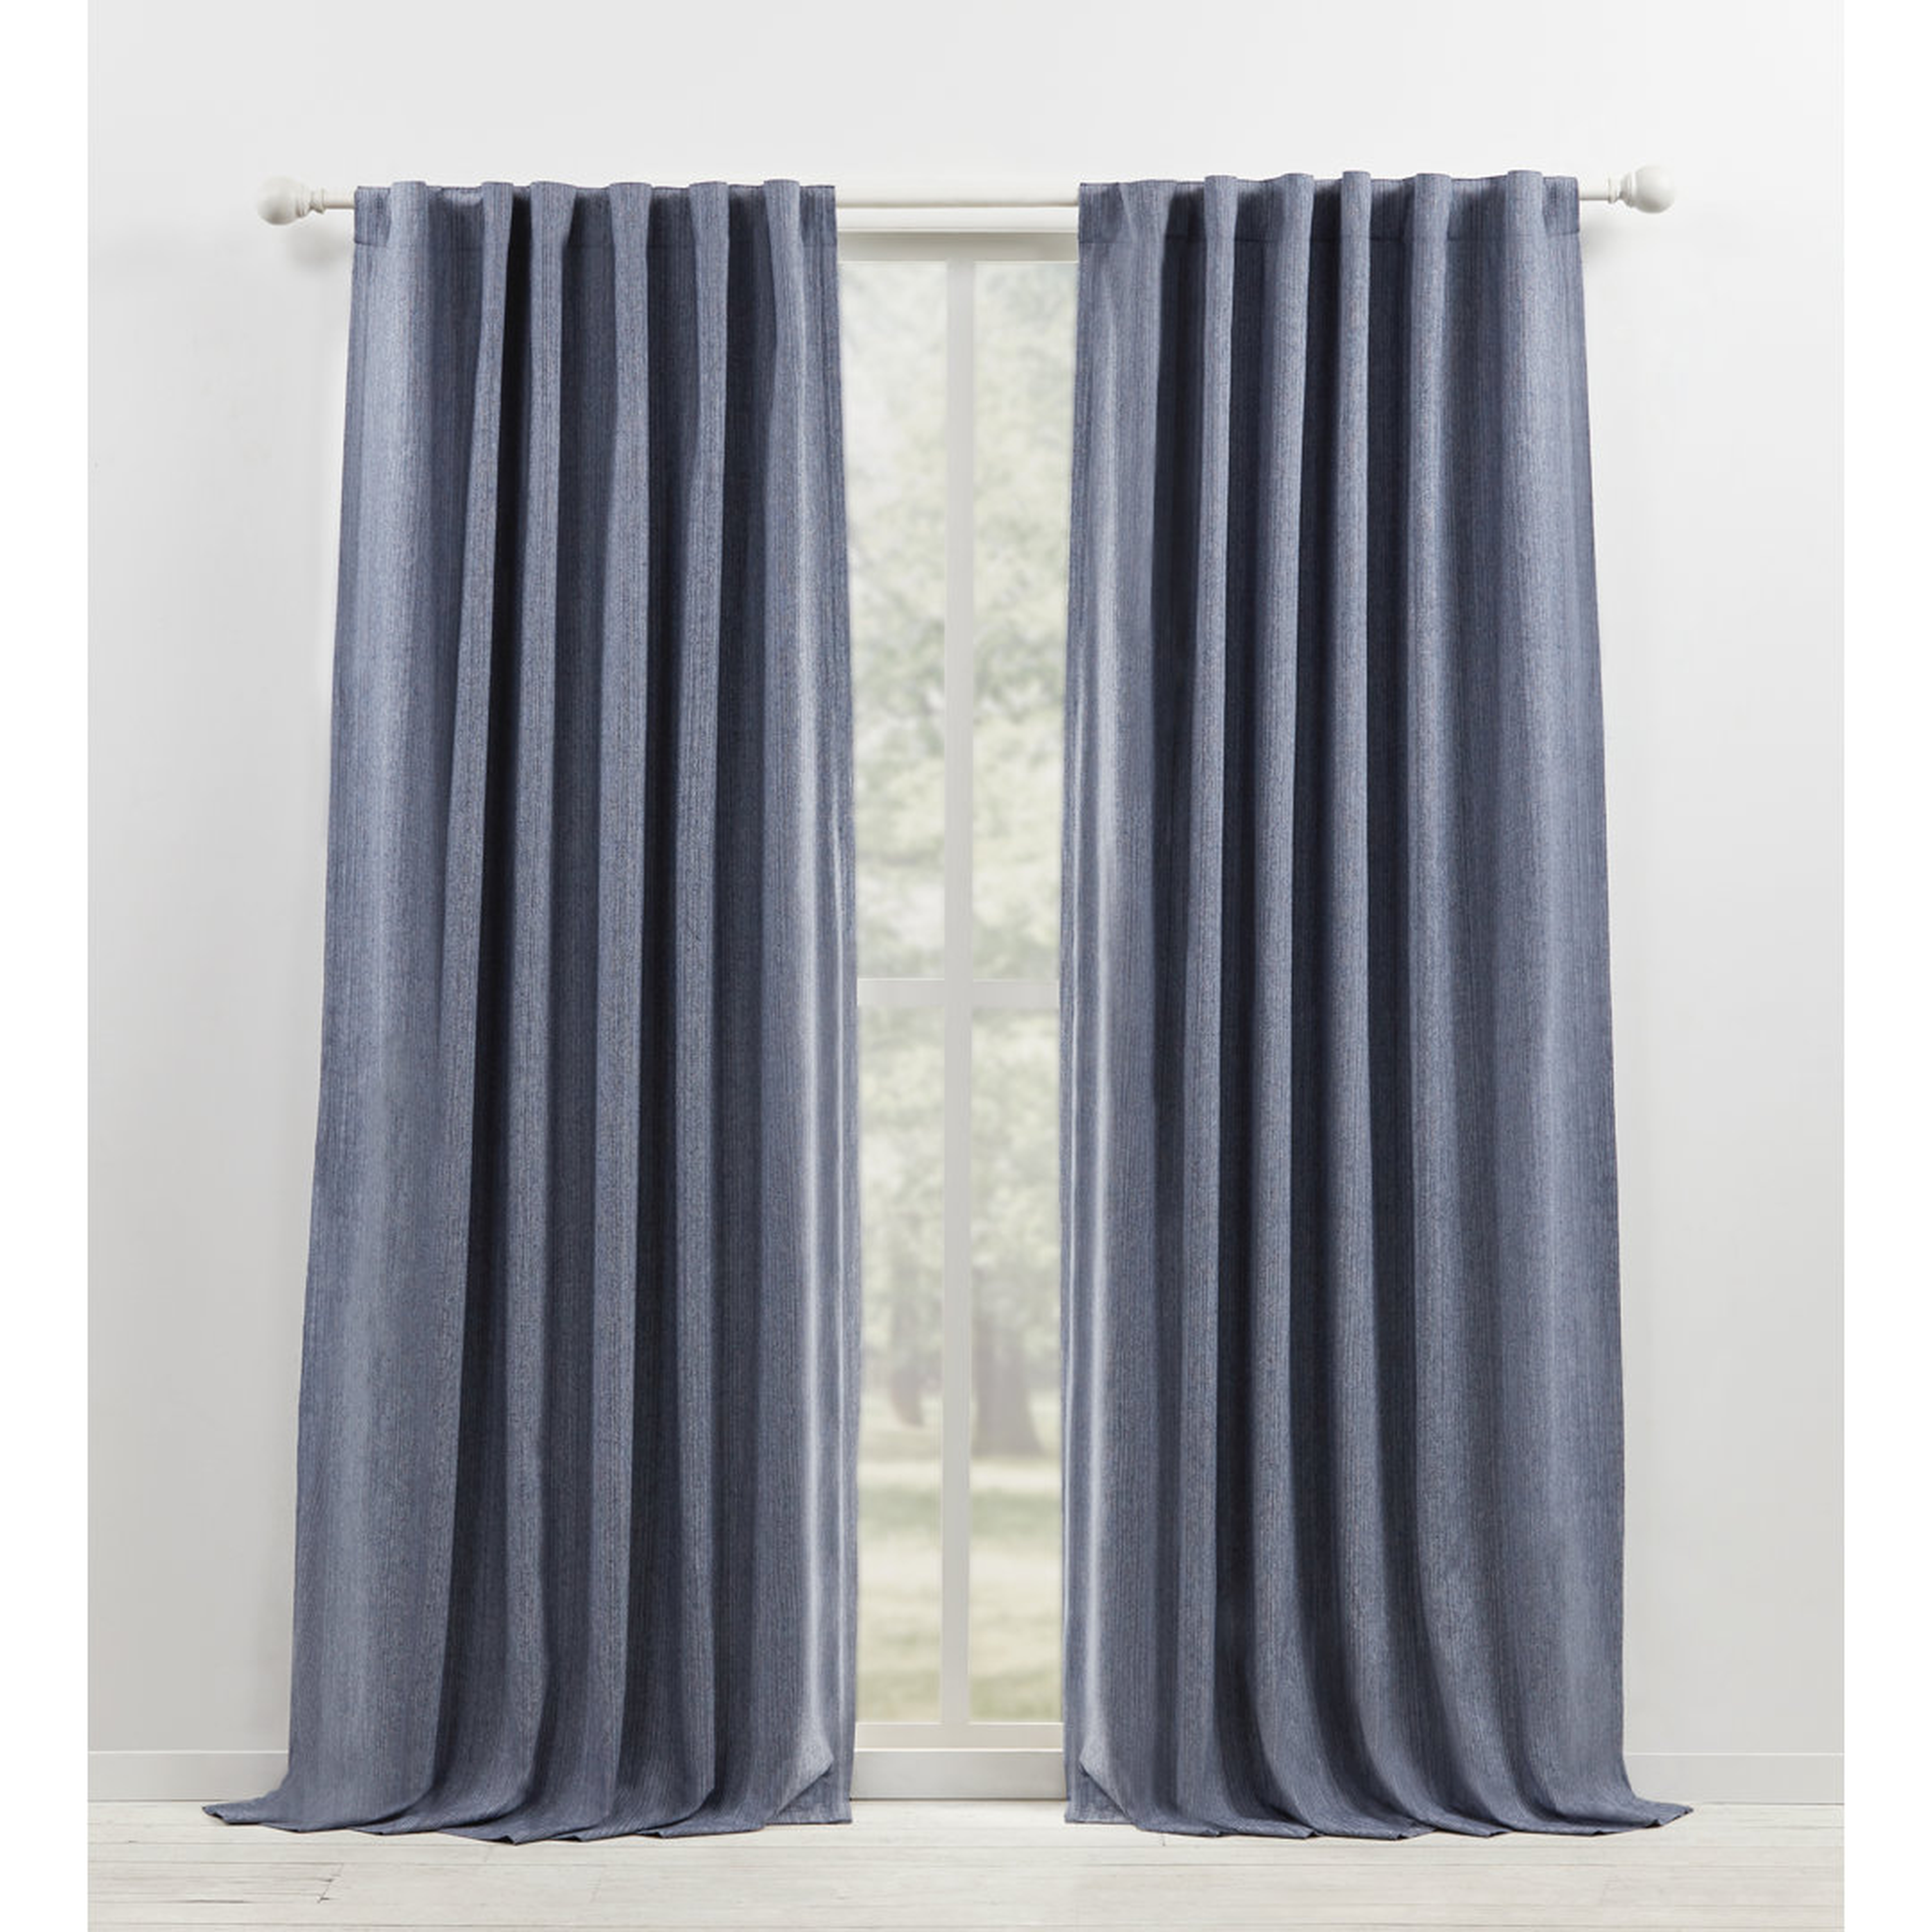 "Lauren Ralph Lauren Sallie Cotton Blend Blackout Thermal Rod Pocket Single Curtain Panel" - Perigold